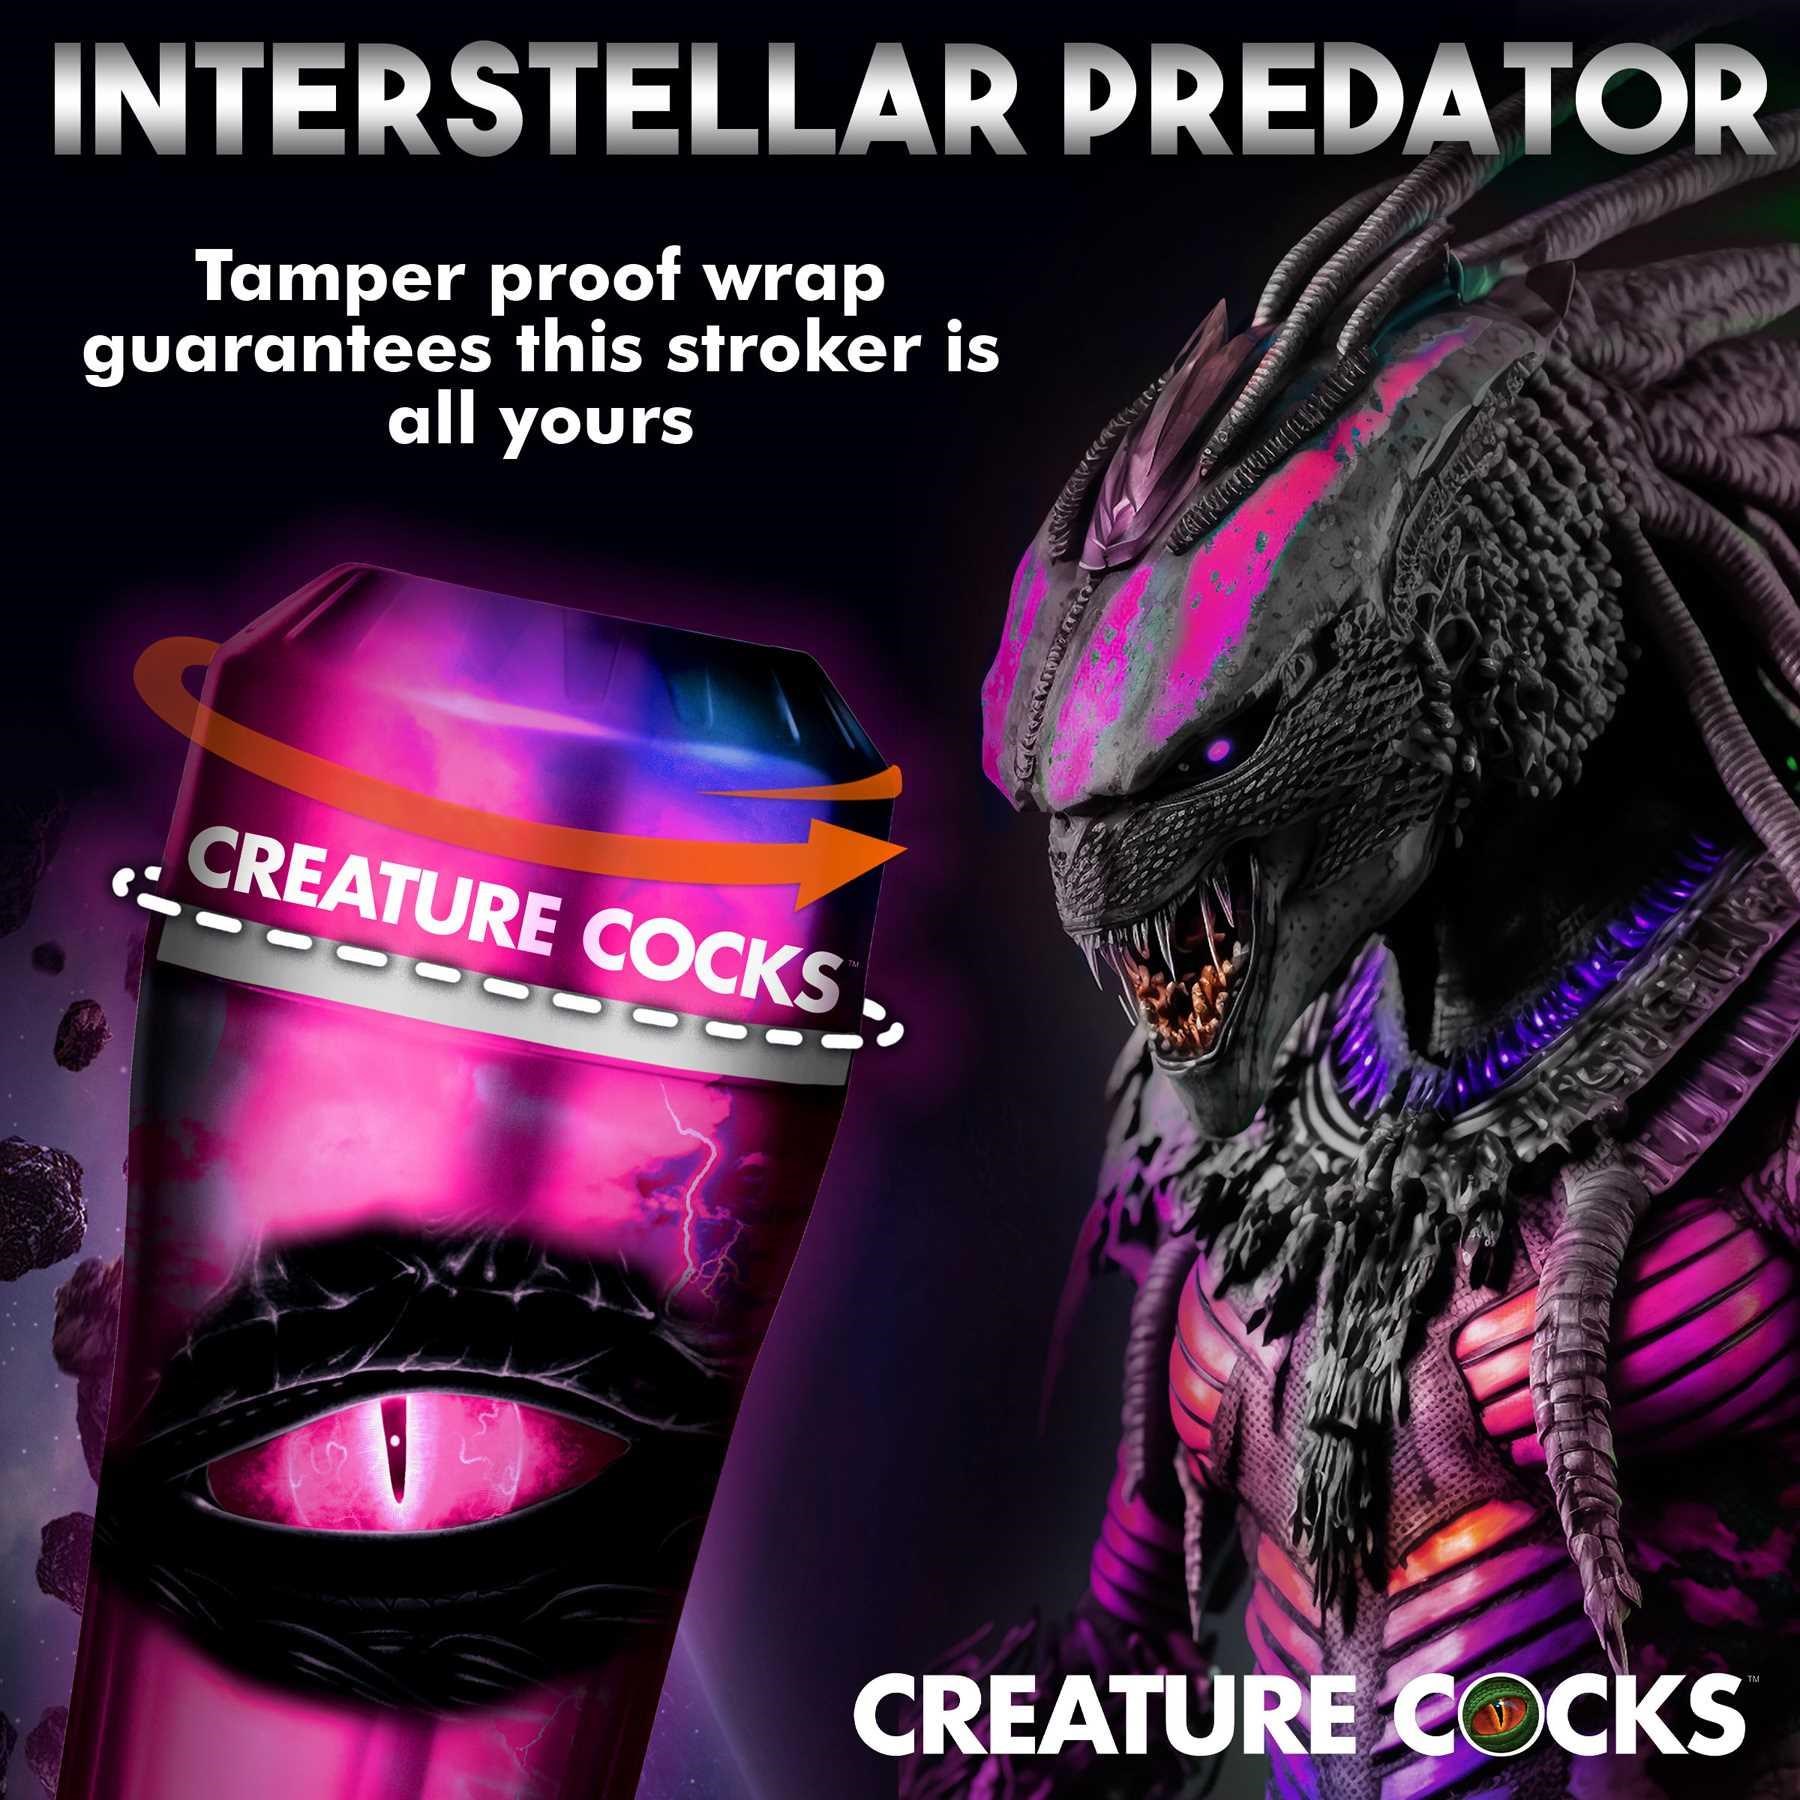 Creature Cocks Predator Creature Stroker mood shot #4